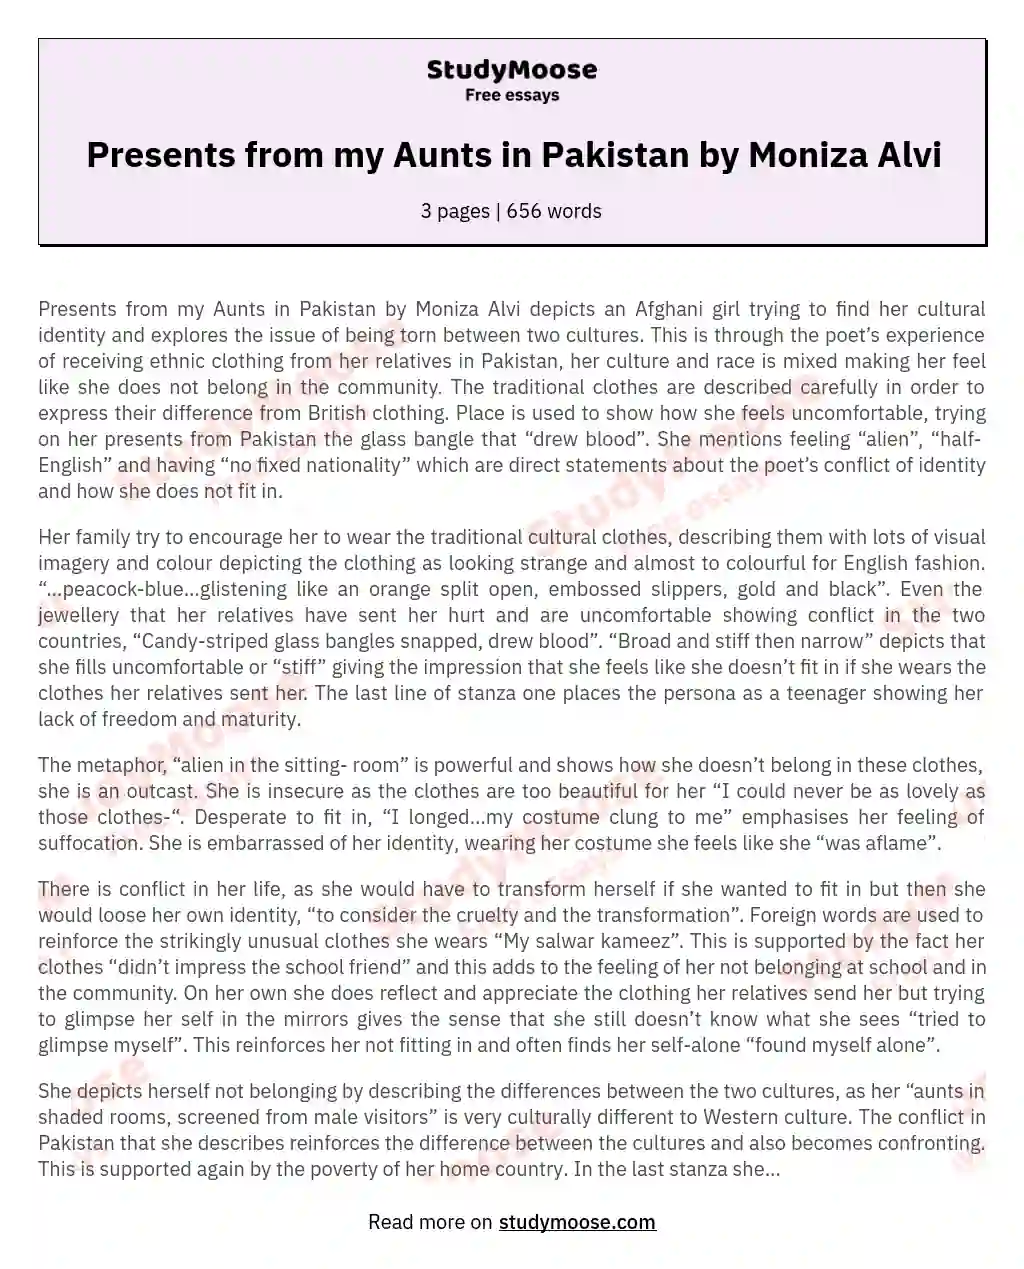 Presents from my Aunts in Pakistan by Moniza Alvi essay